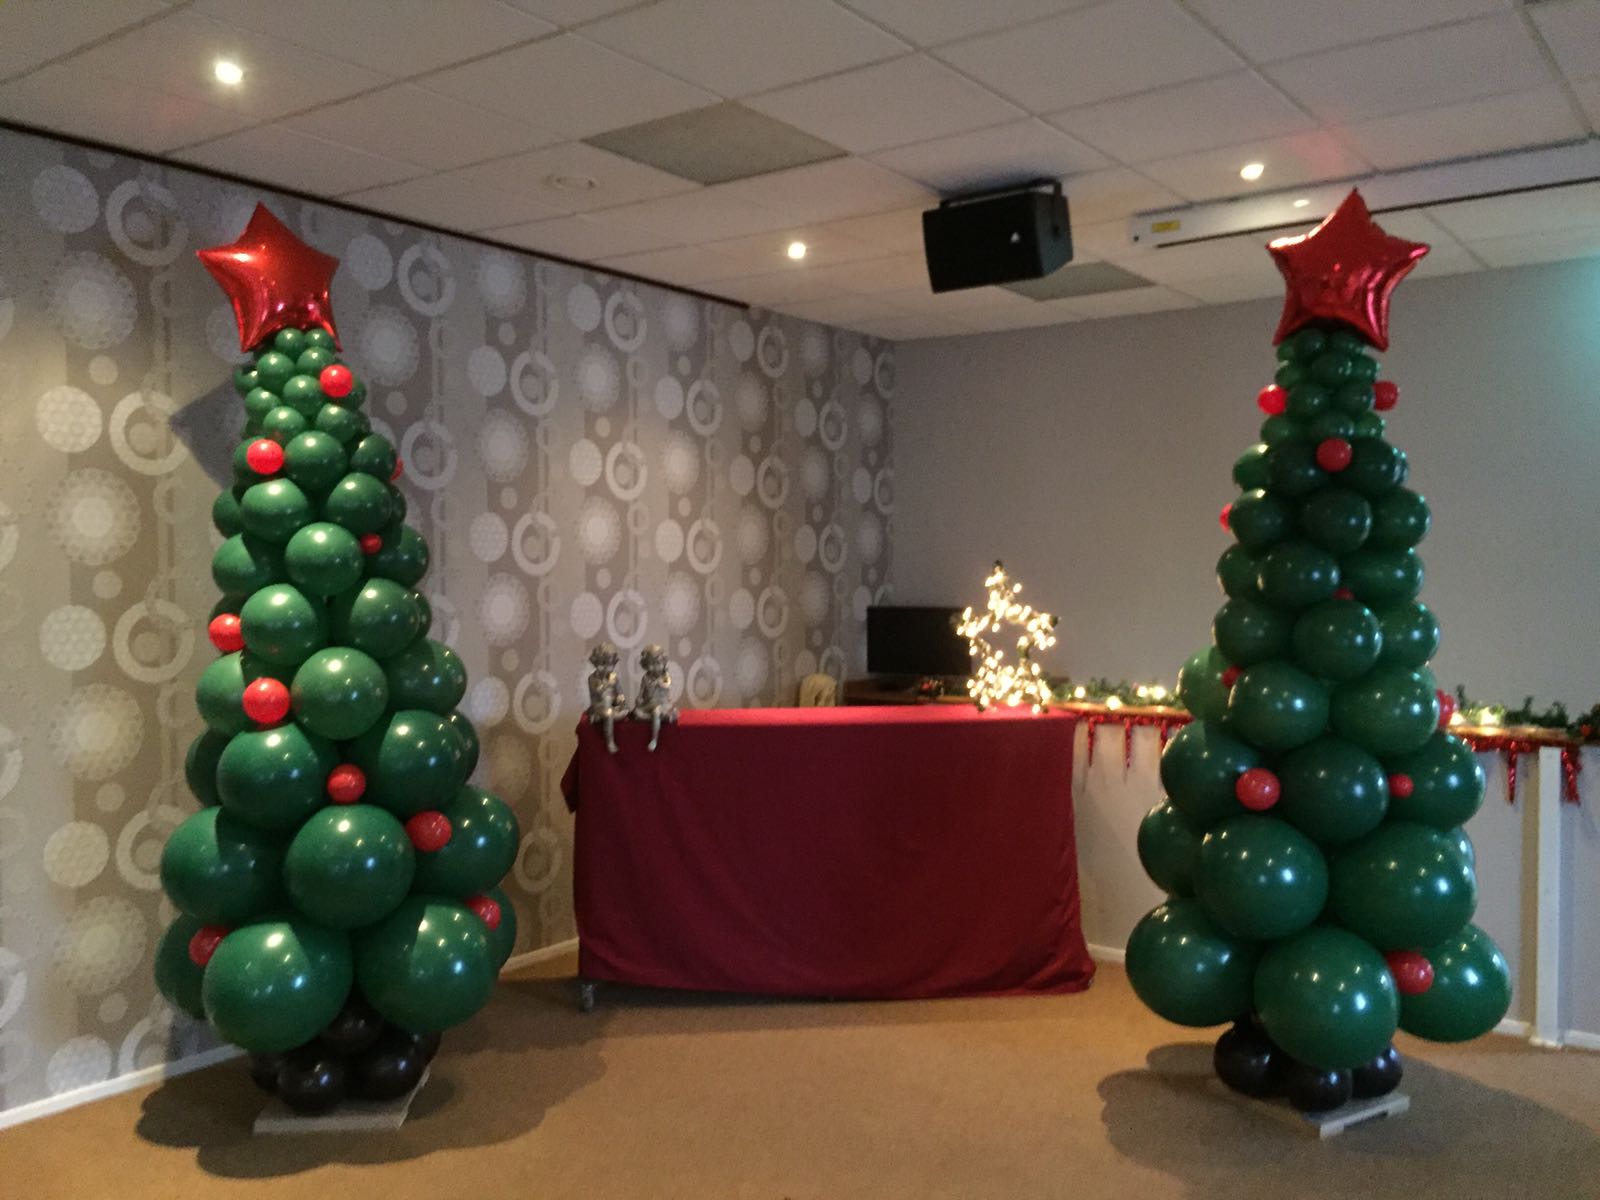 De Ballonnenkoning - ballondecoratie - kerstviering - ballonpilaren - kerstboom - ster topballon - groen rood